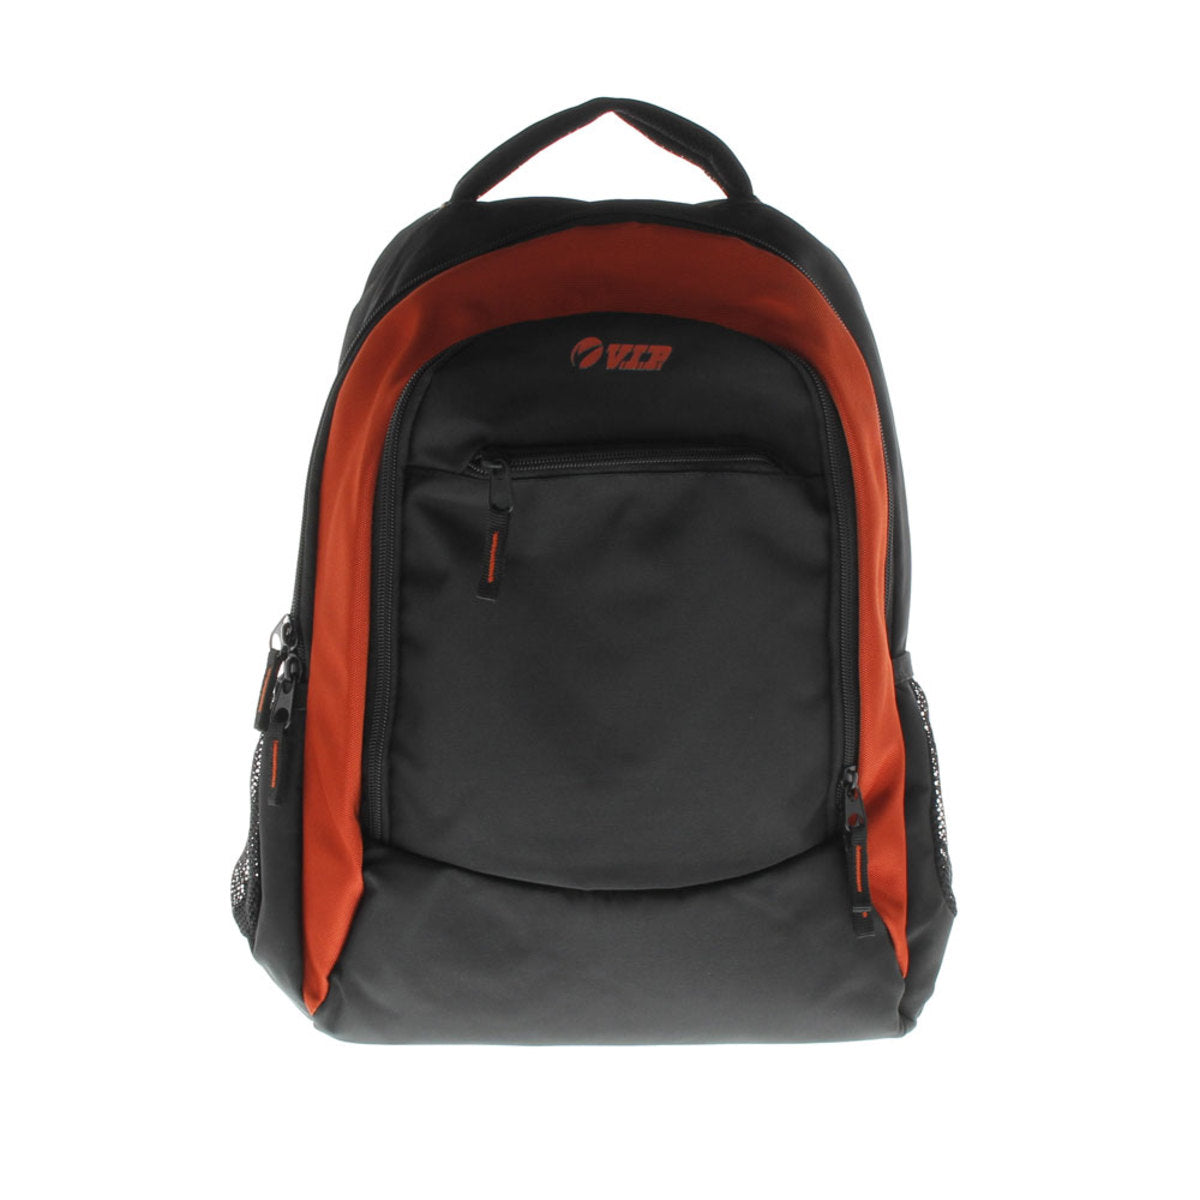 VIP Laptop Backpack Black With Orange, I02/01